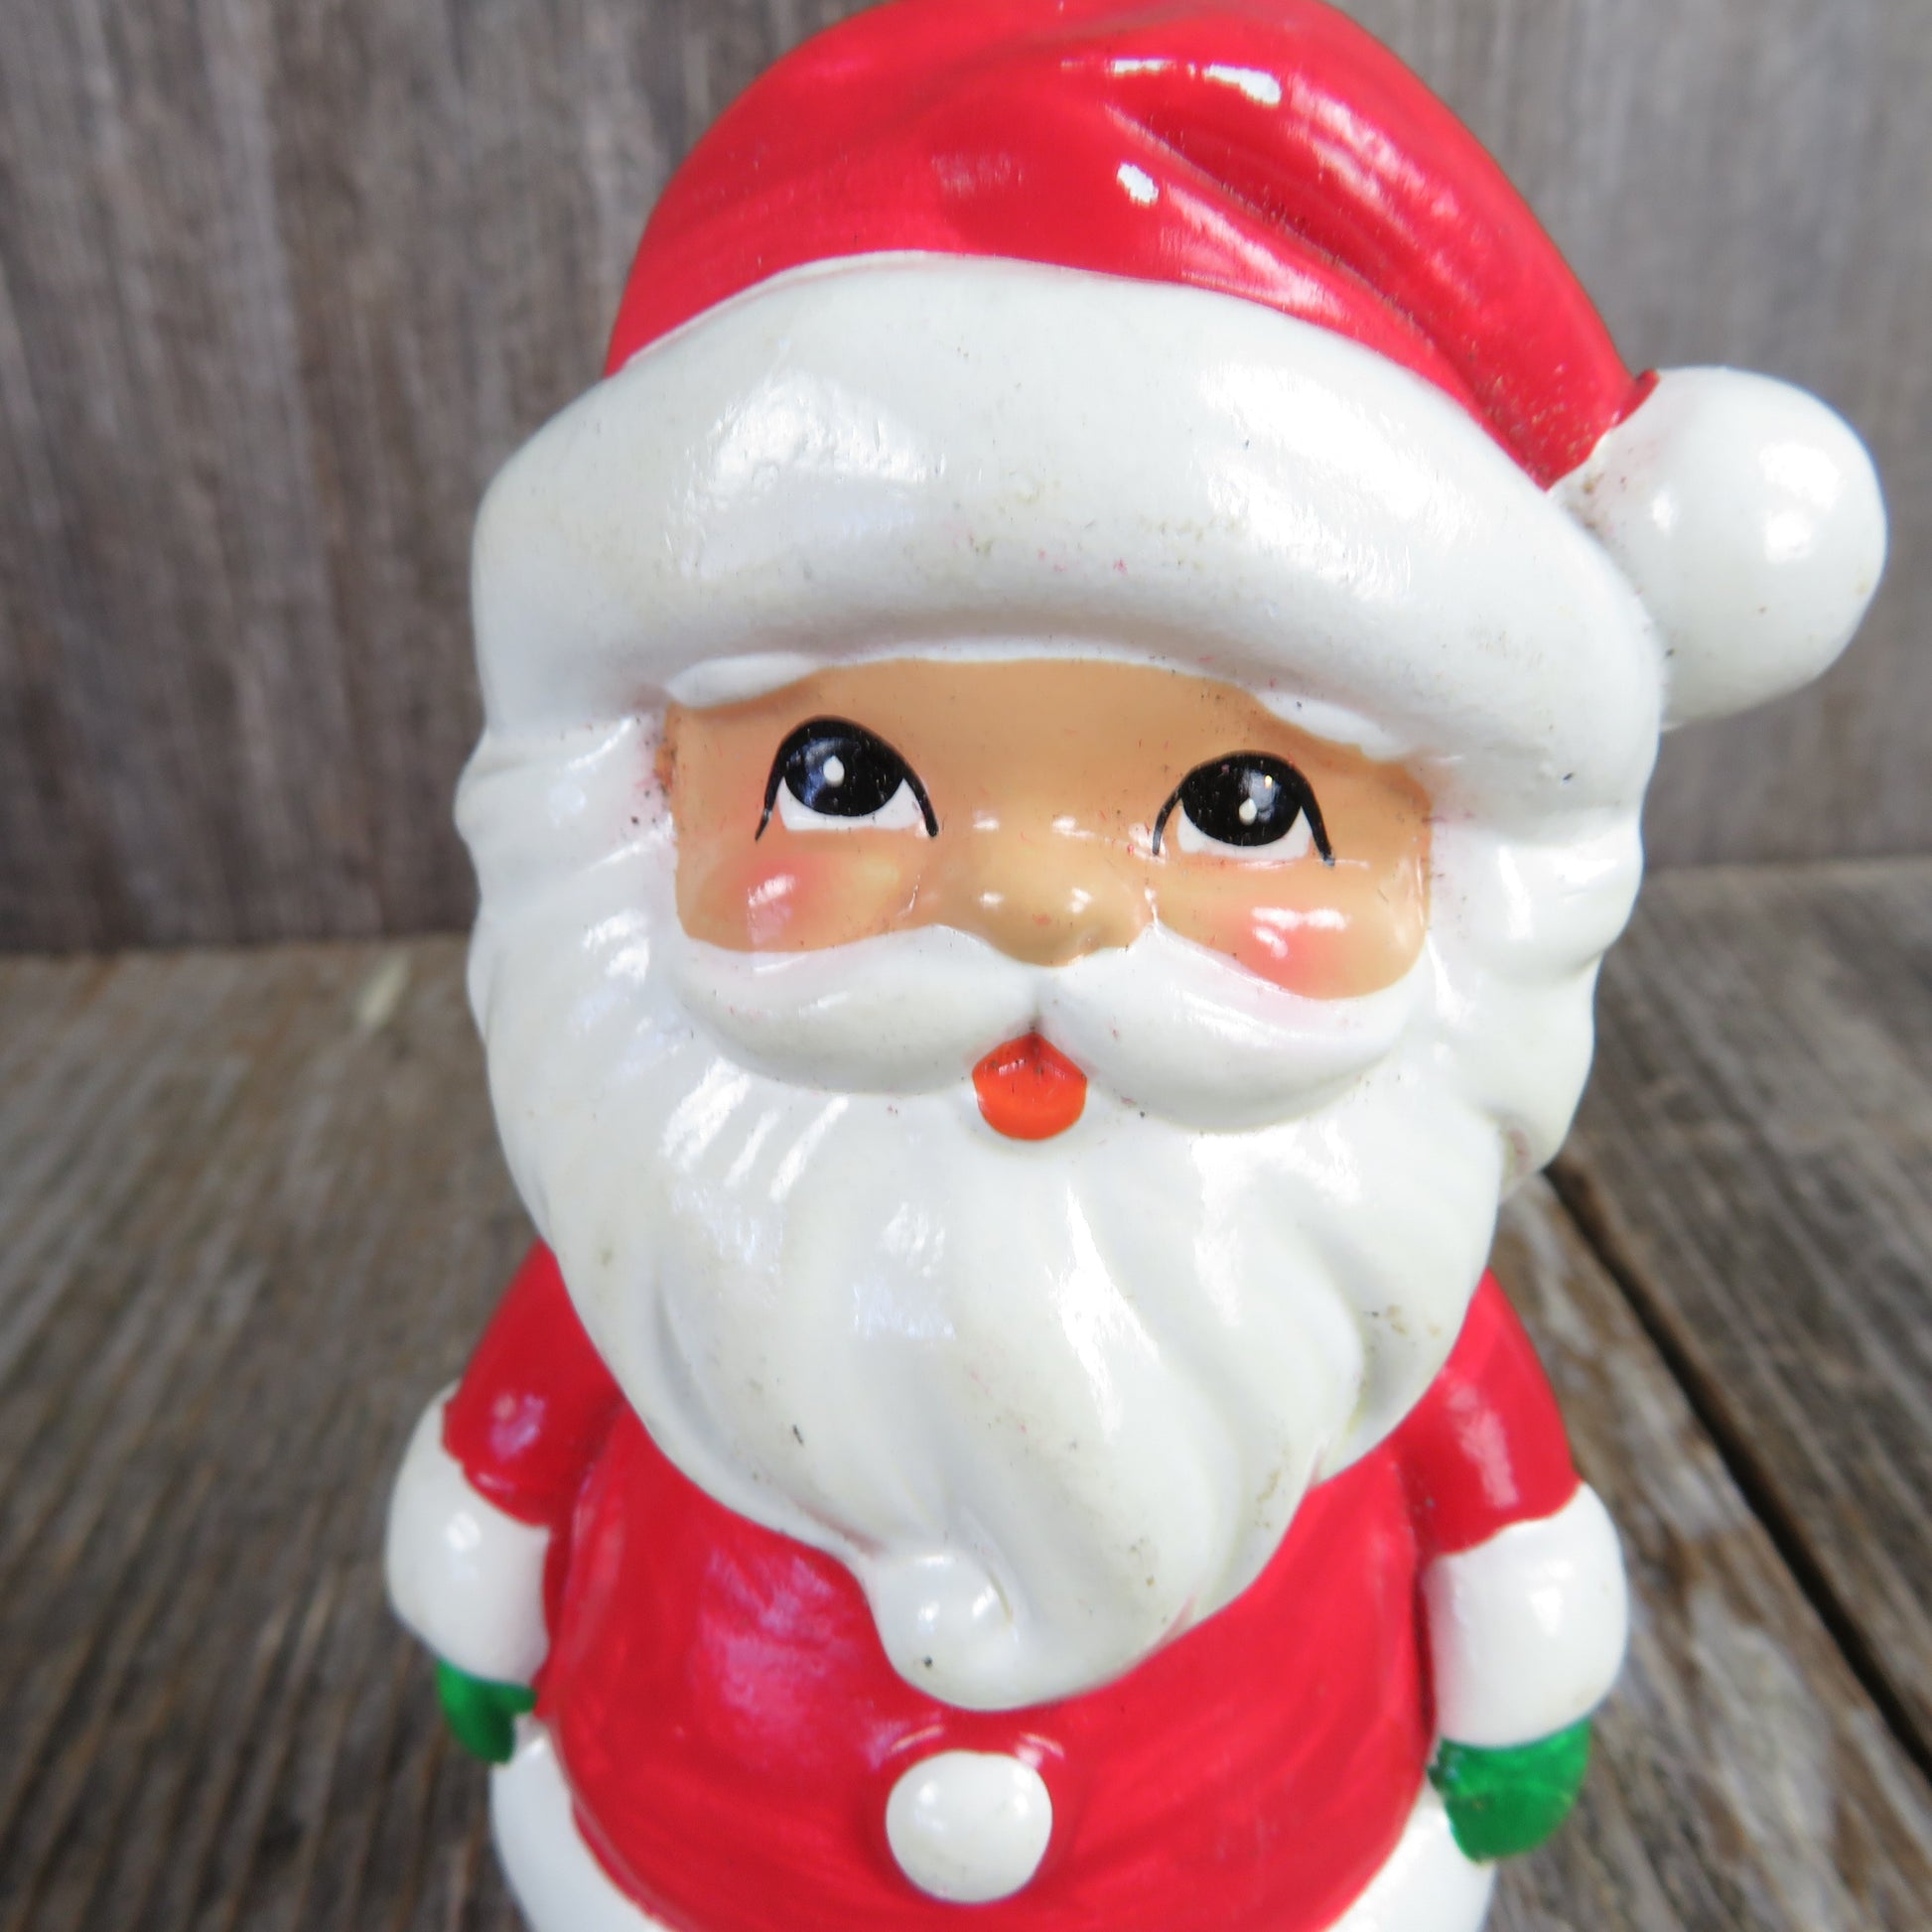 Vintage Santa Claus Chalkware Figurine Christmas Red White Joseph Figure - At Grandma's Table